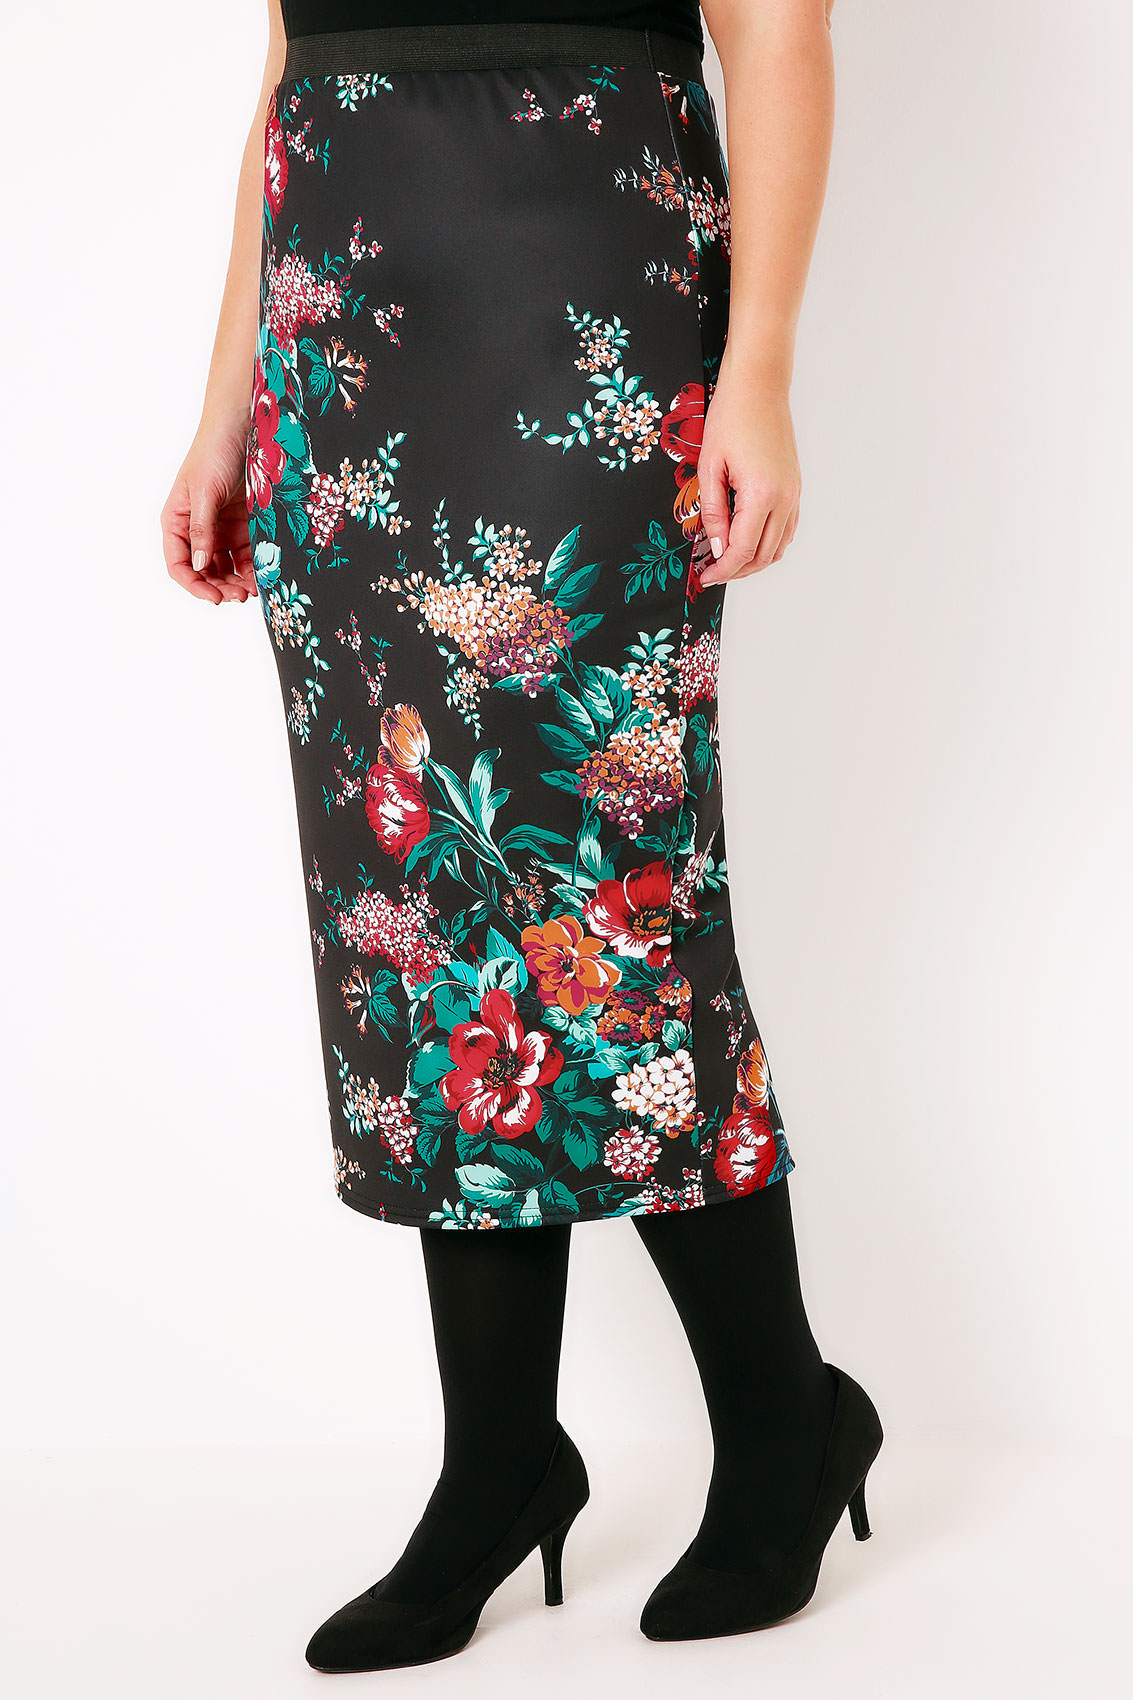 Black & Multi Floral Print Oriental Scuba Pencil Skirt, Plus size 16 to 36